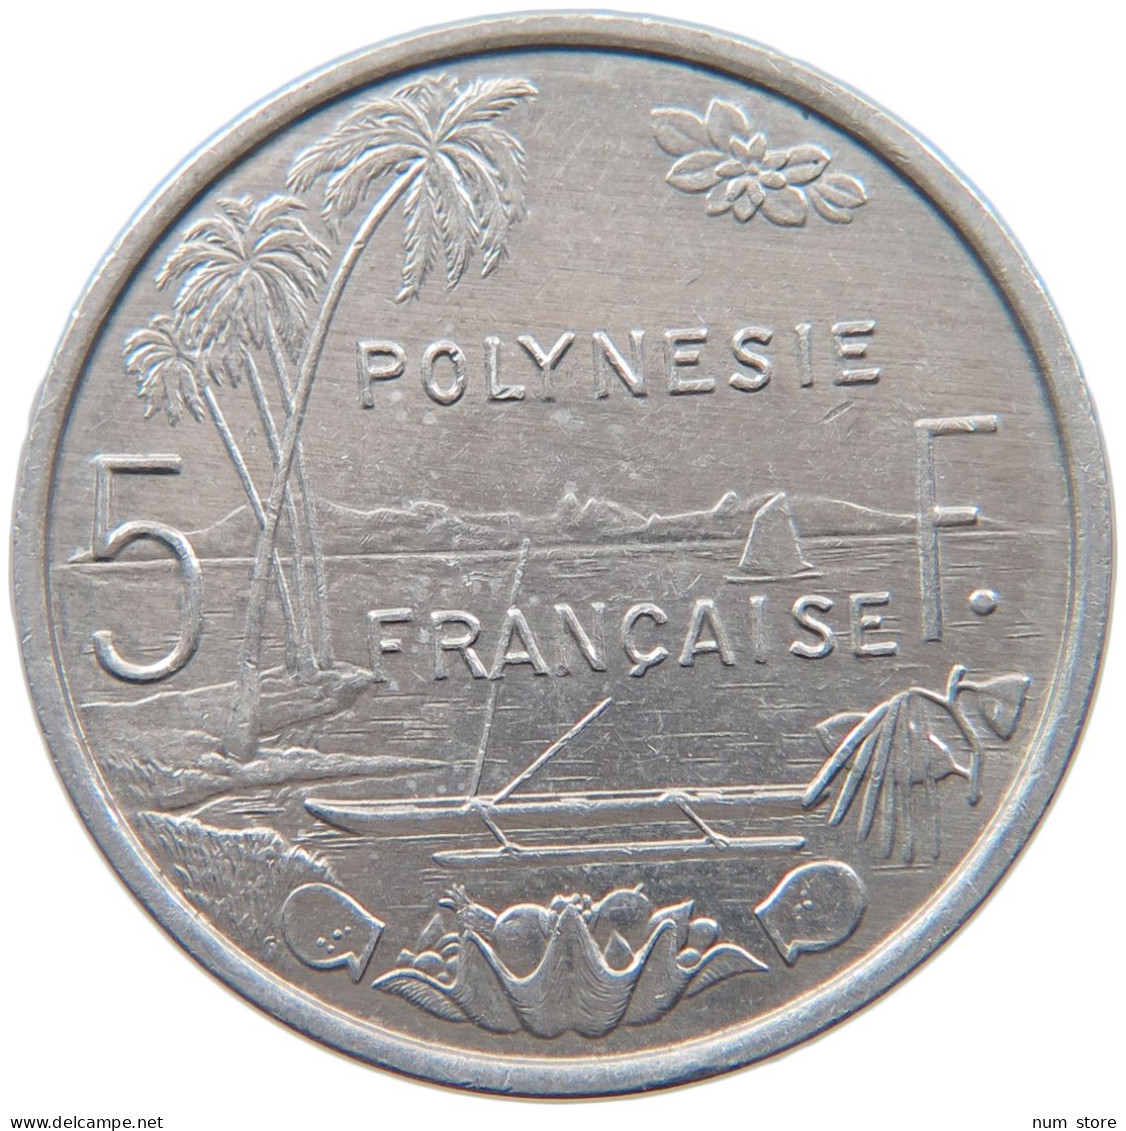 FRENCH POLYNESIA 5 FRANCS 1994 #s098 0225 - Polinesia Francese